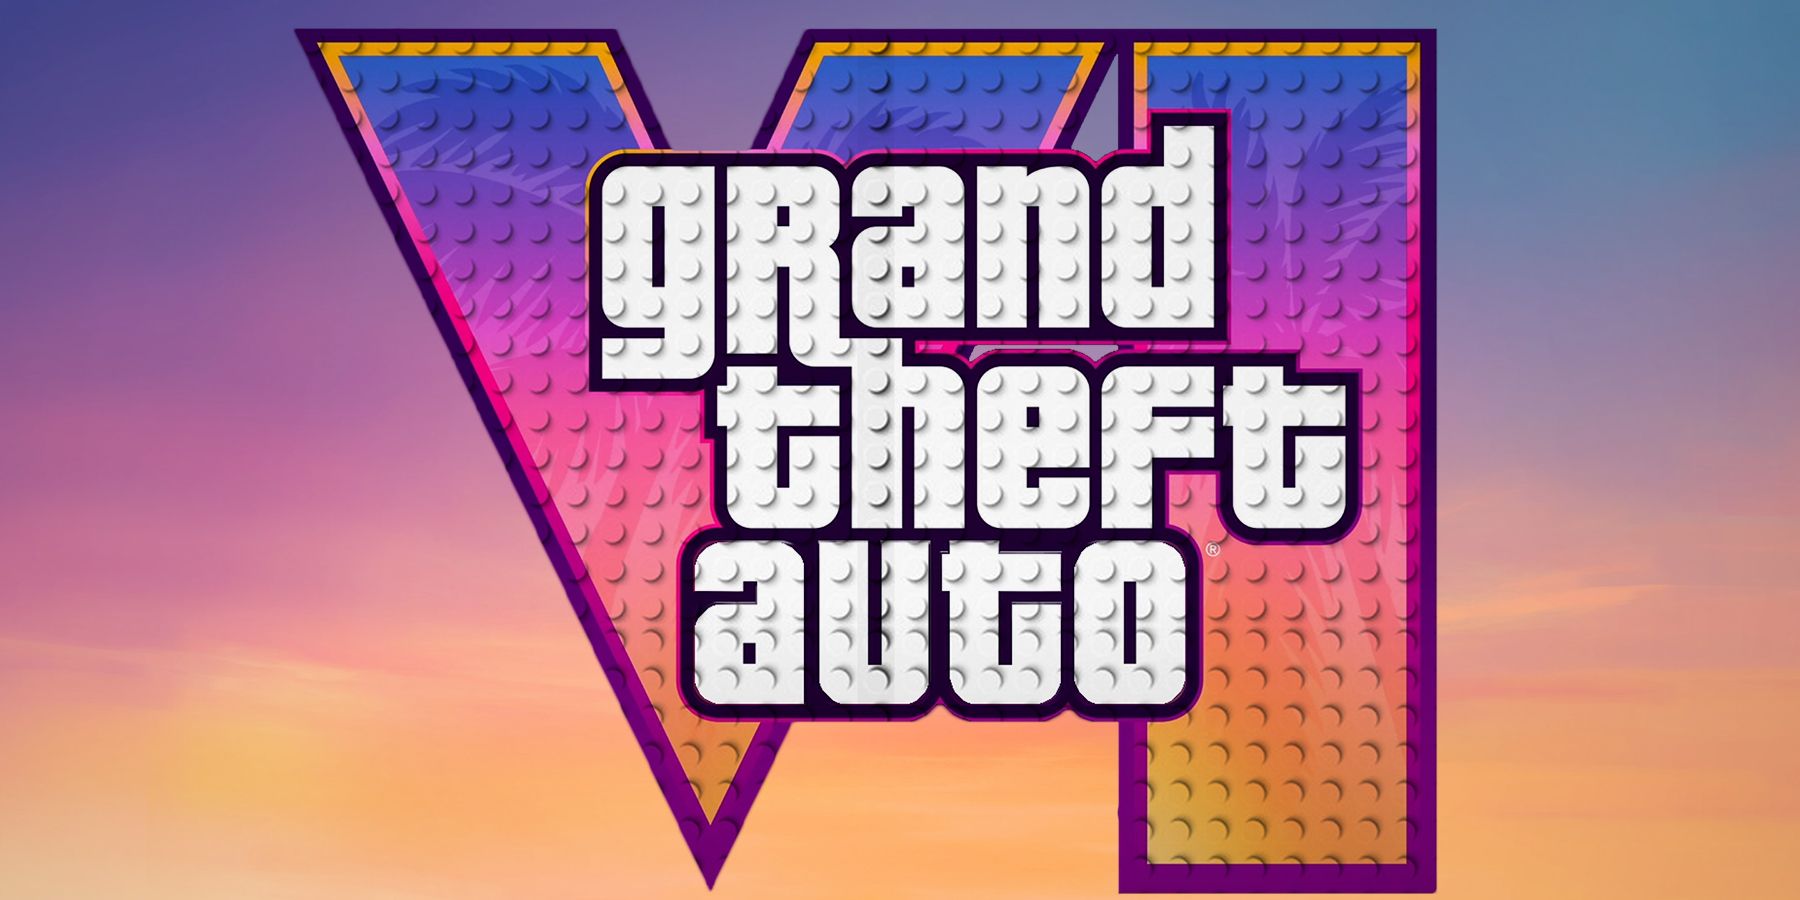 Grand Theft Auto 6 logo with LEGO brick texture